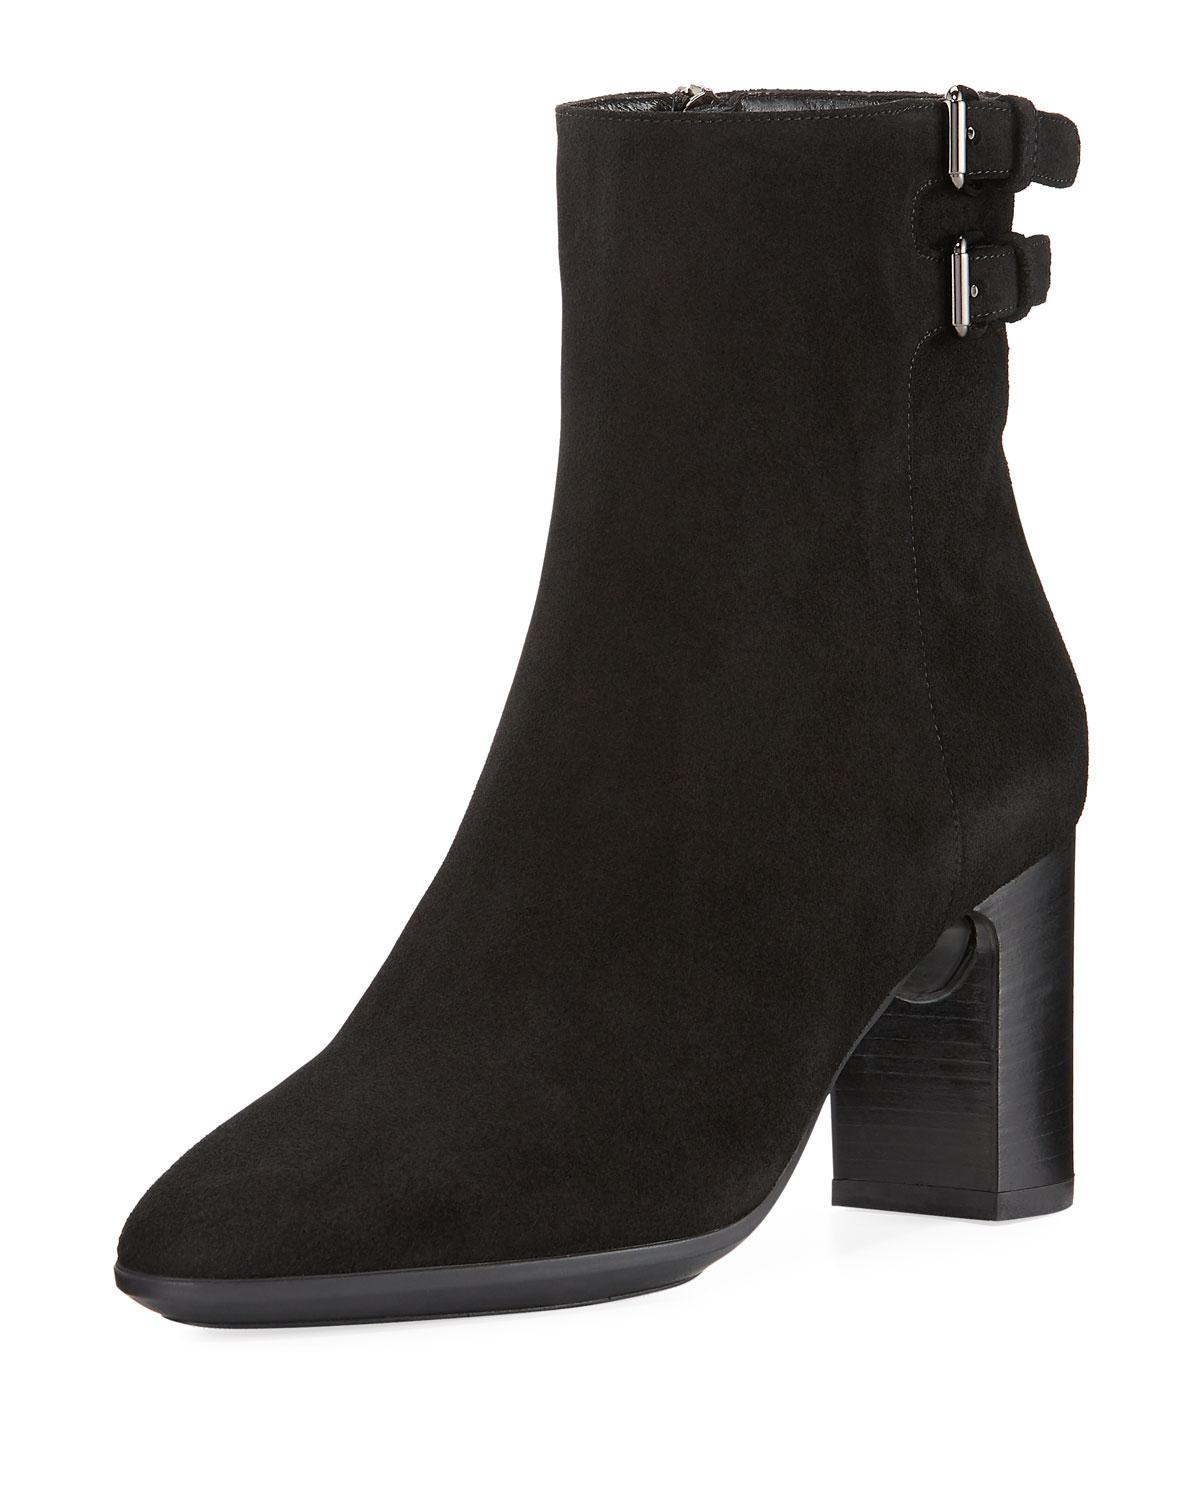 Aquatalia Womens Boots in Black Color, Size 7.5 ZMY | eBay